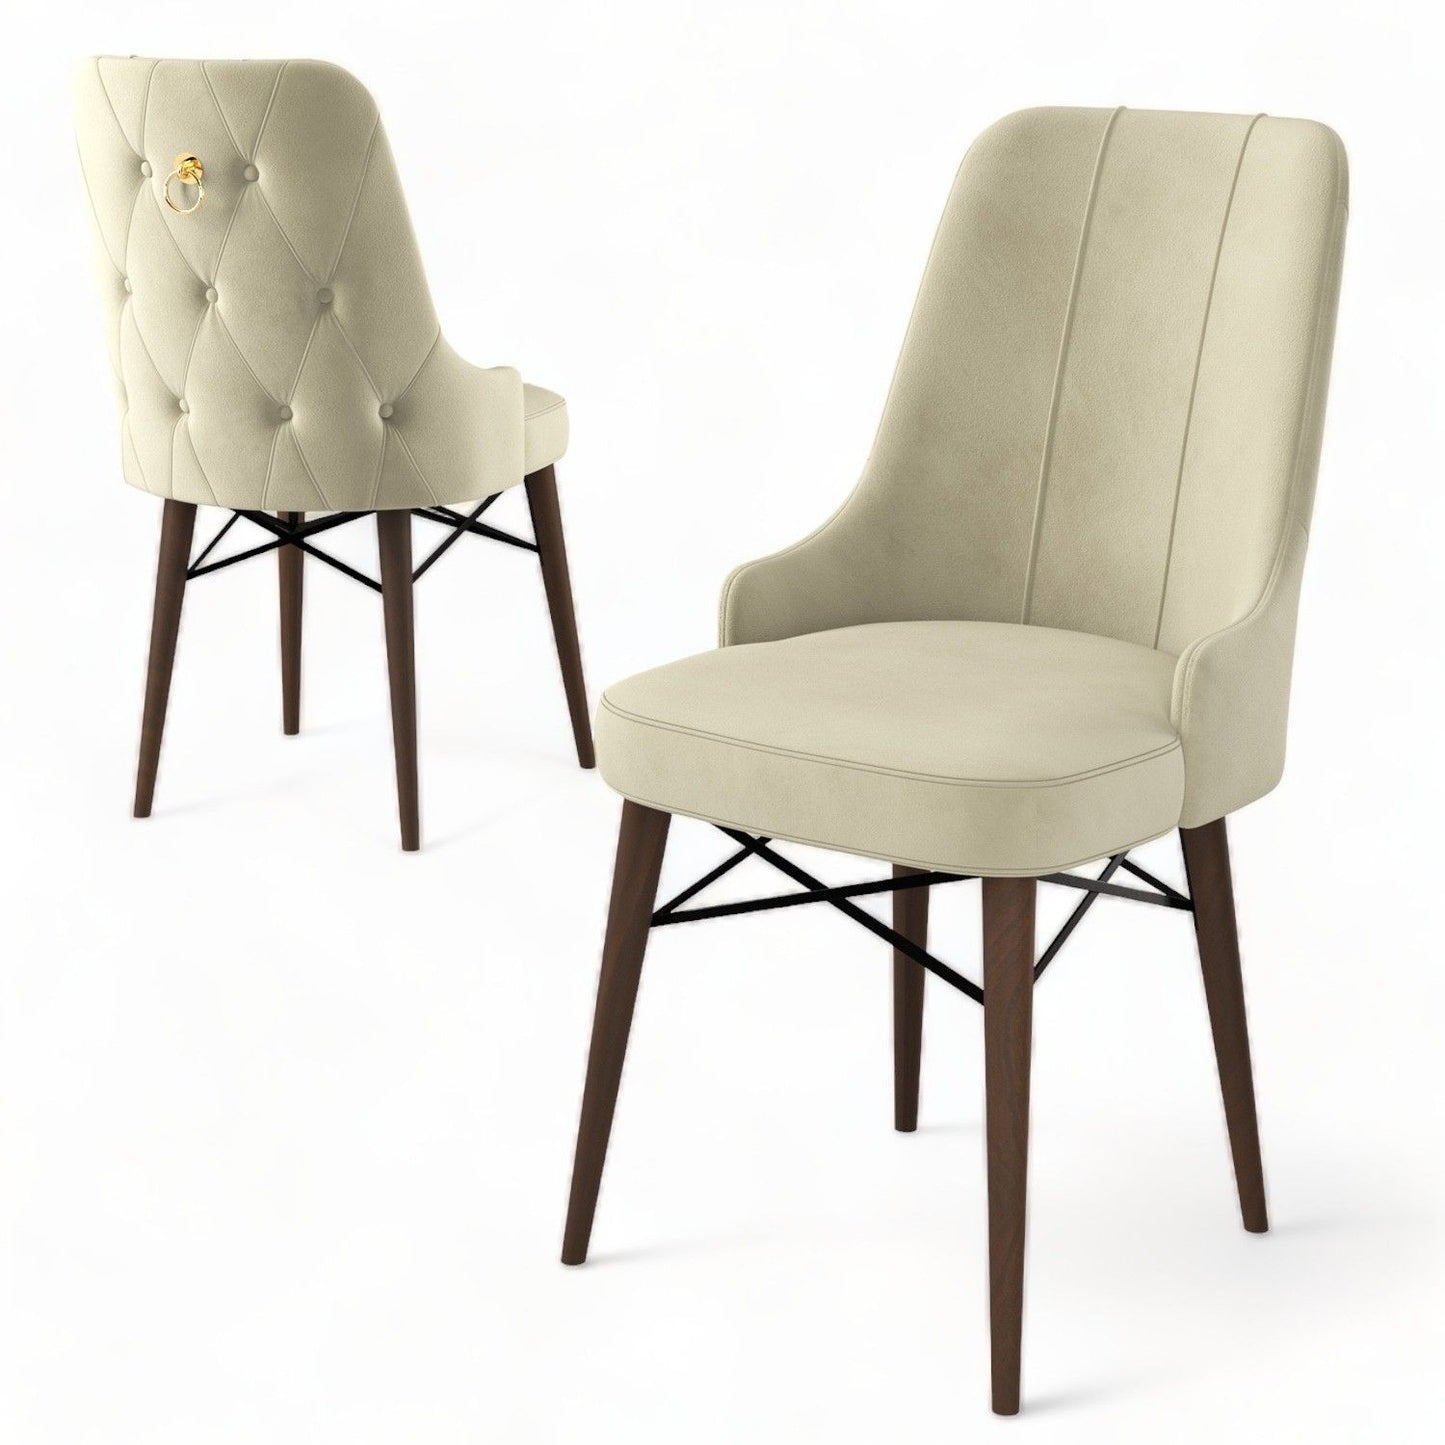 Pare - Cream, Brown - Chair Set (4 Pieces)